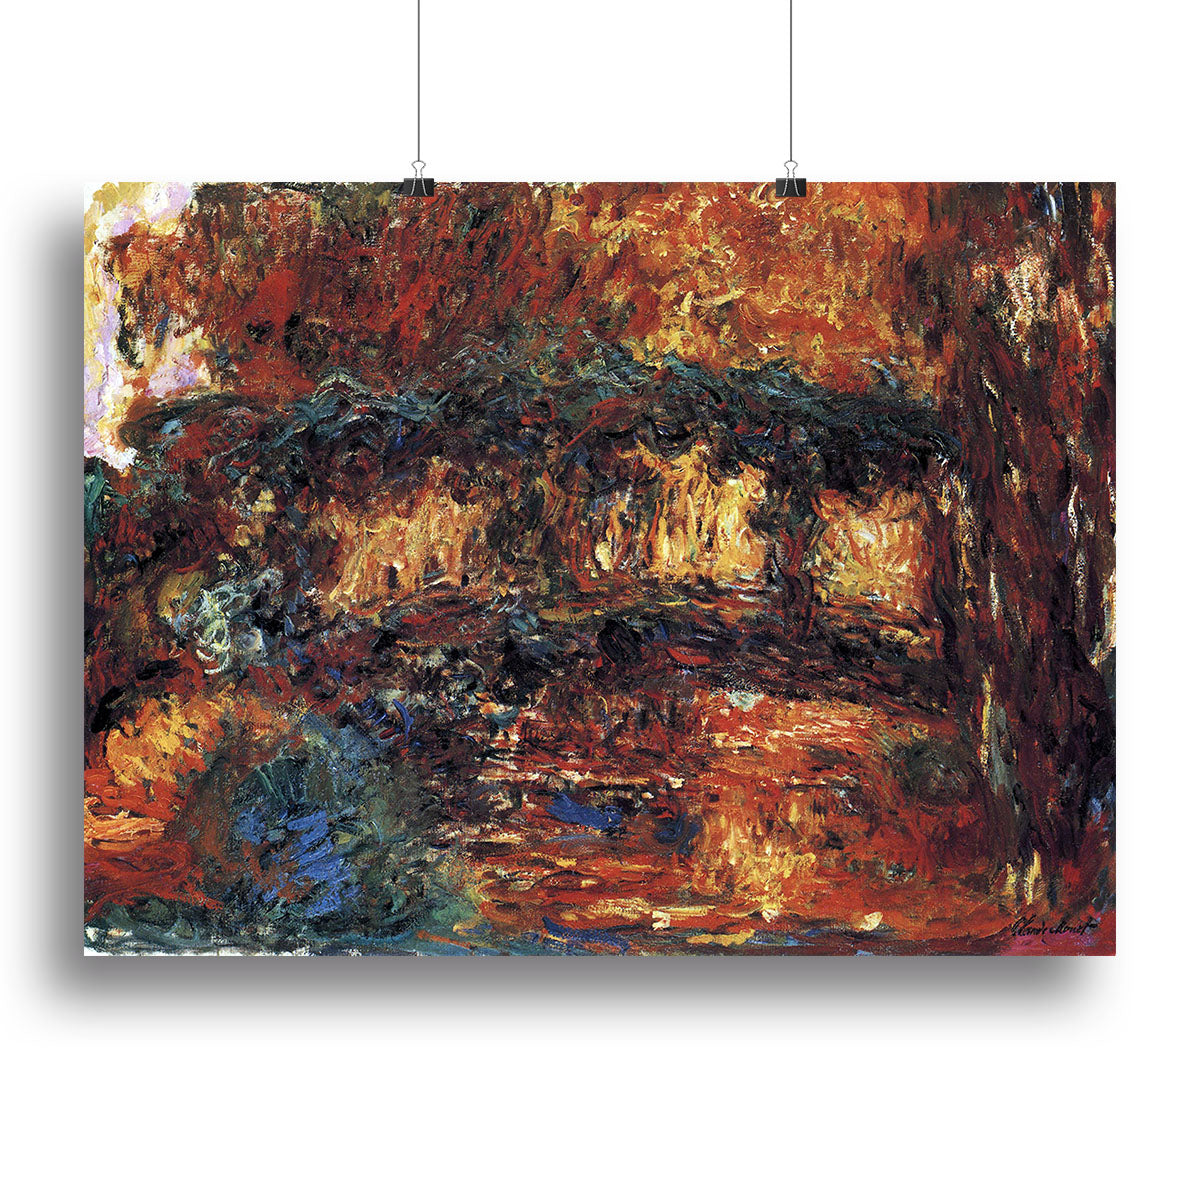 The Japanese Bridge 2 by Monet Canvas Print or Poster - Canvas Art Rocks - 2